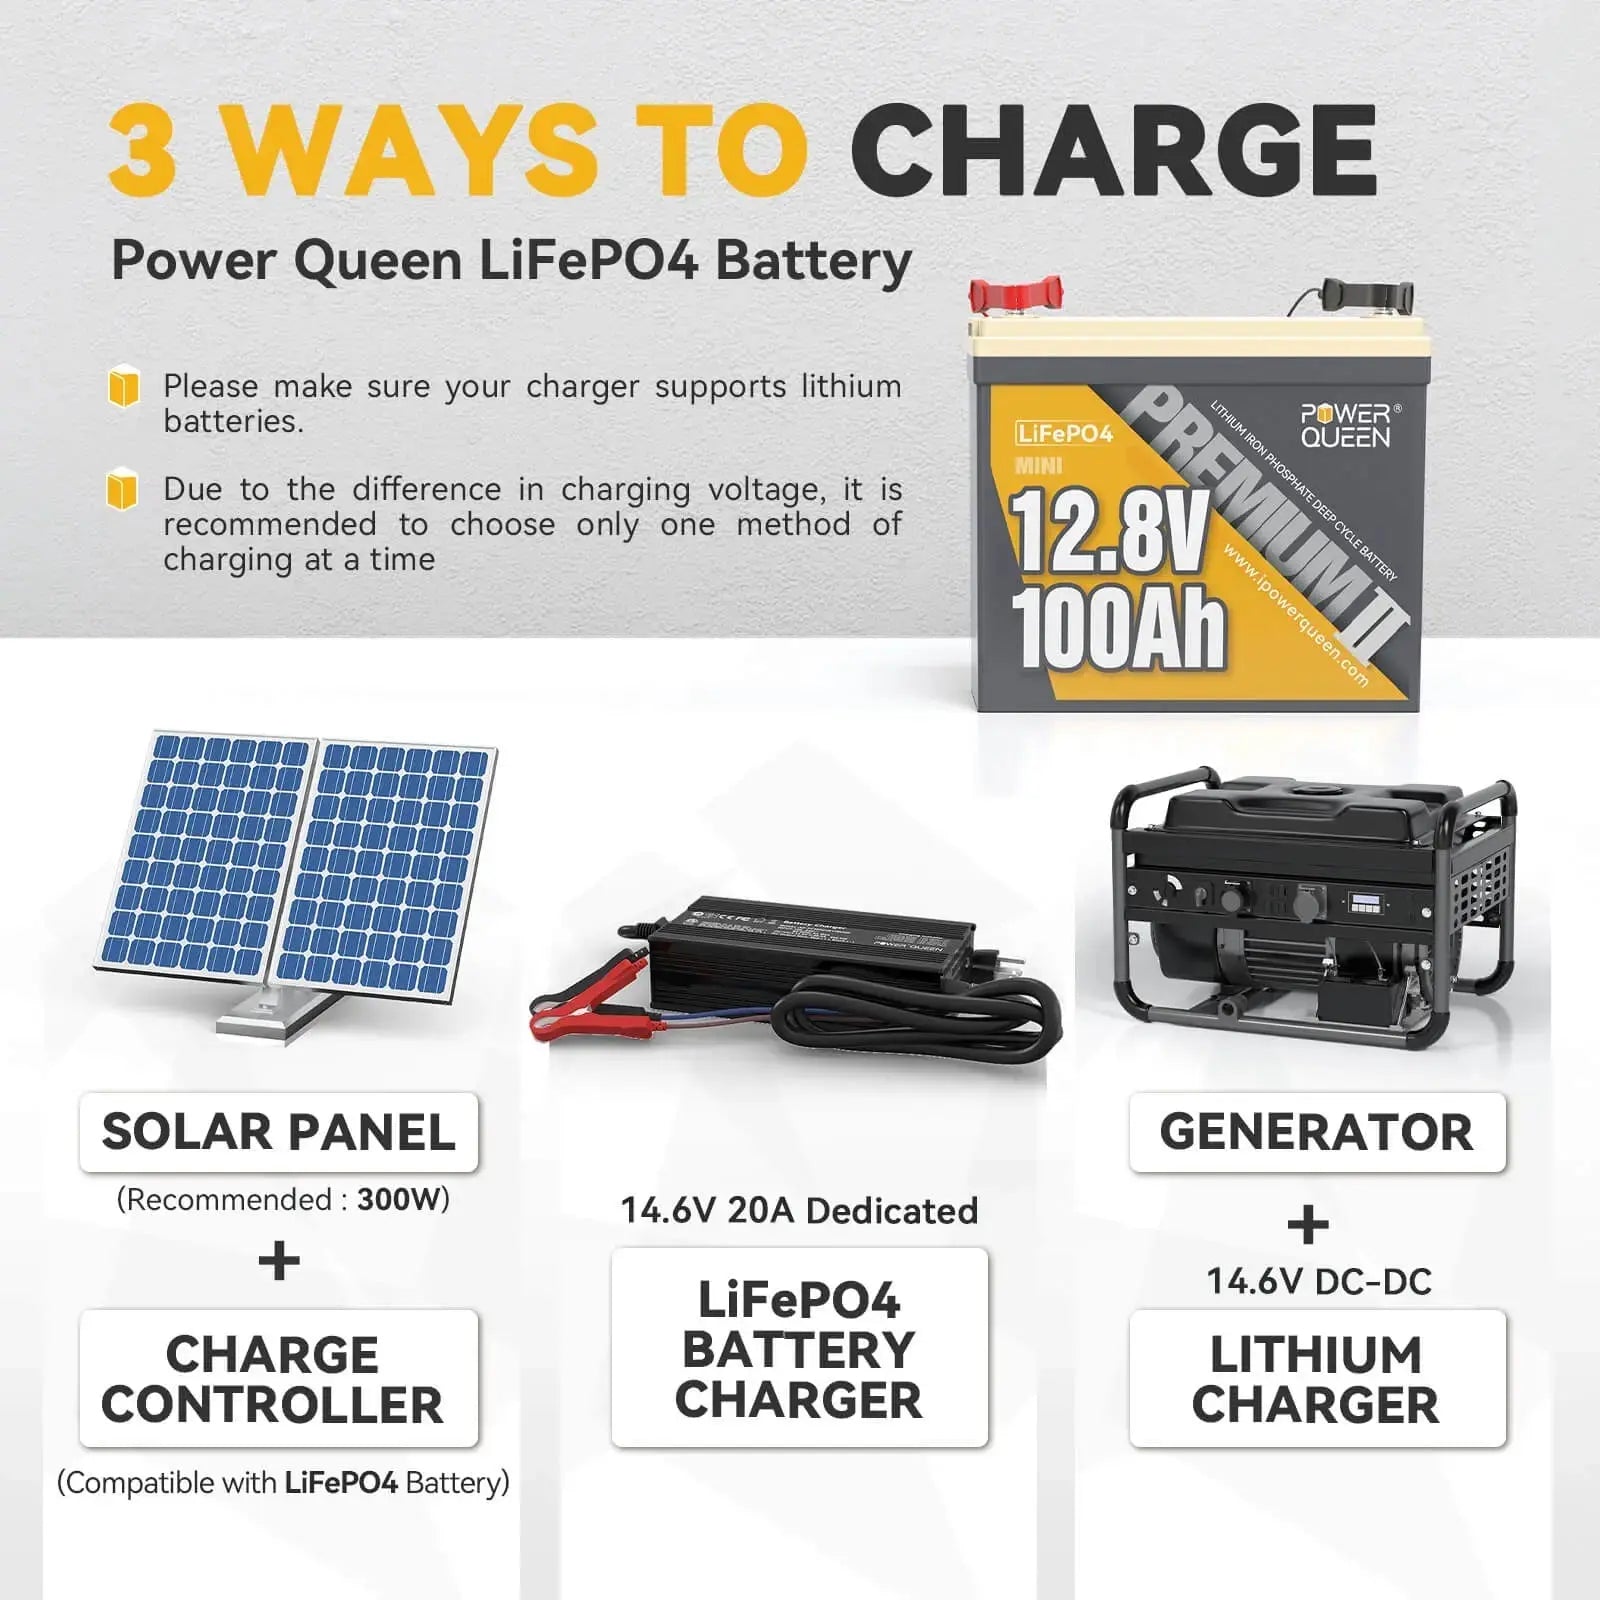 Power Queen 12.8V 100Ah Mini LiFePO4 Battery, Built-in 100A BMS Power Queen